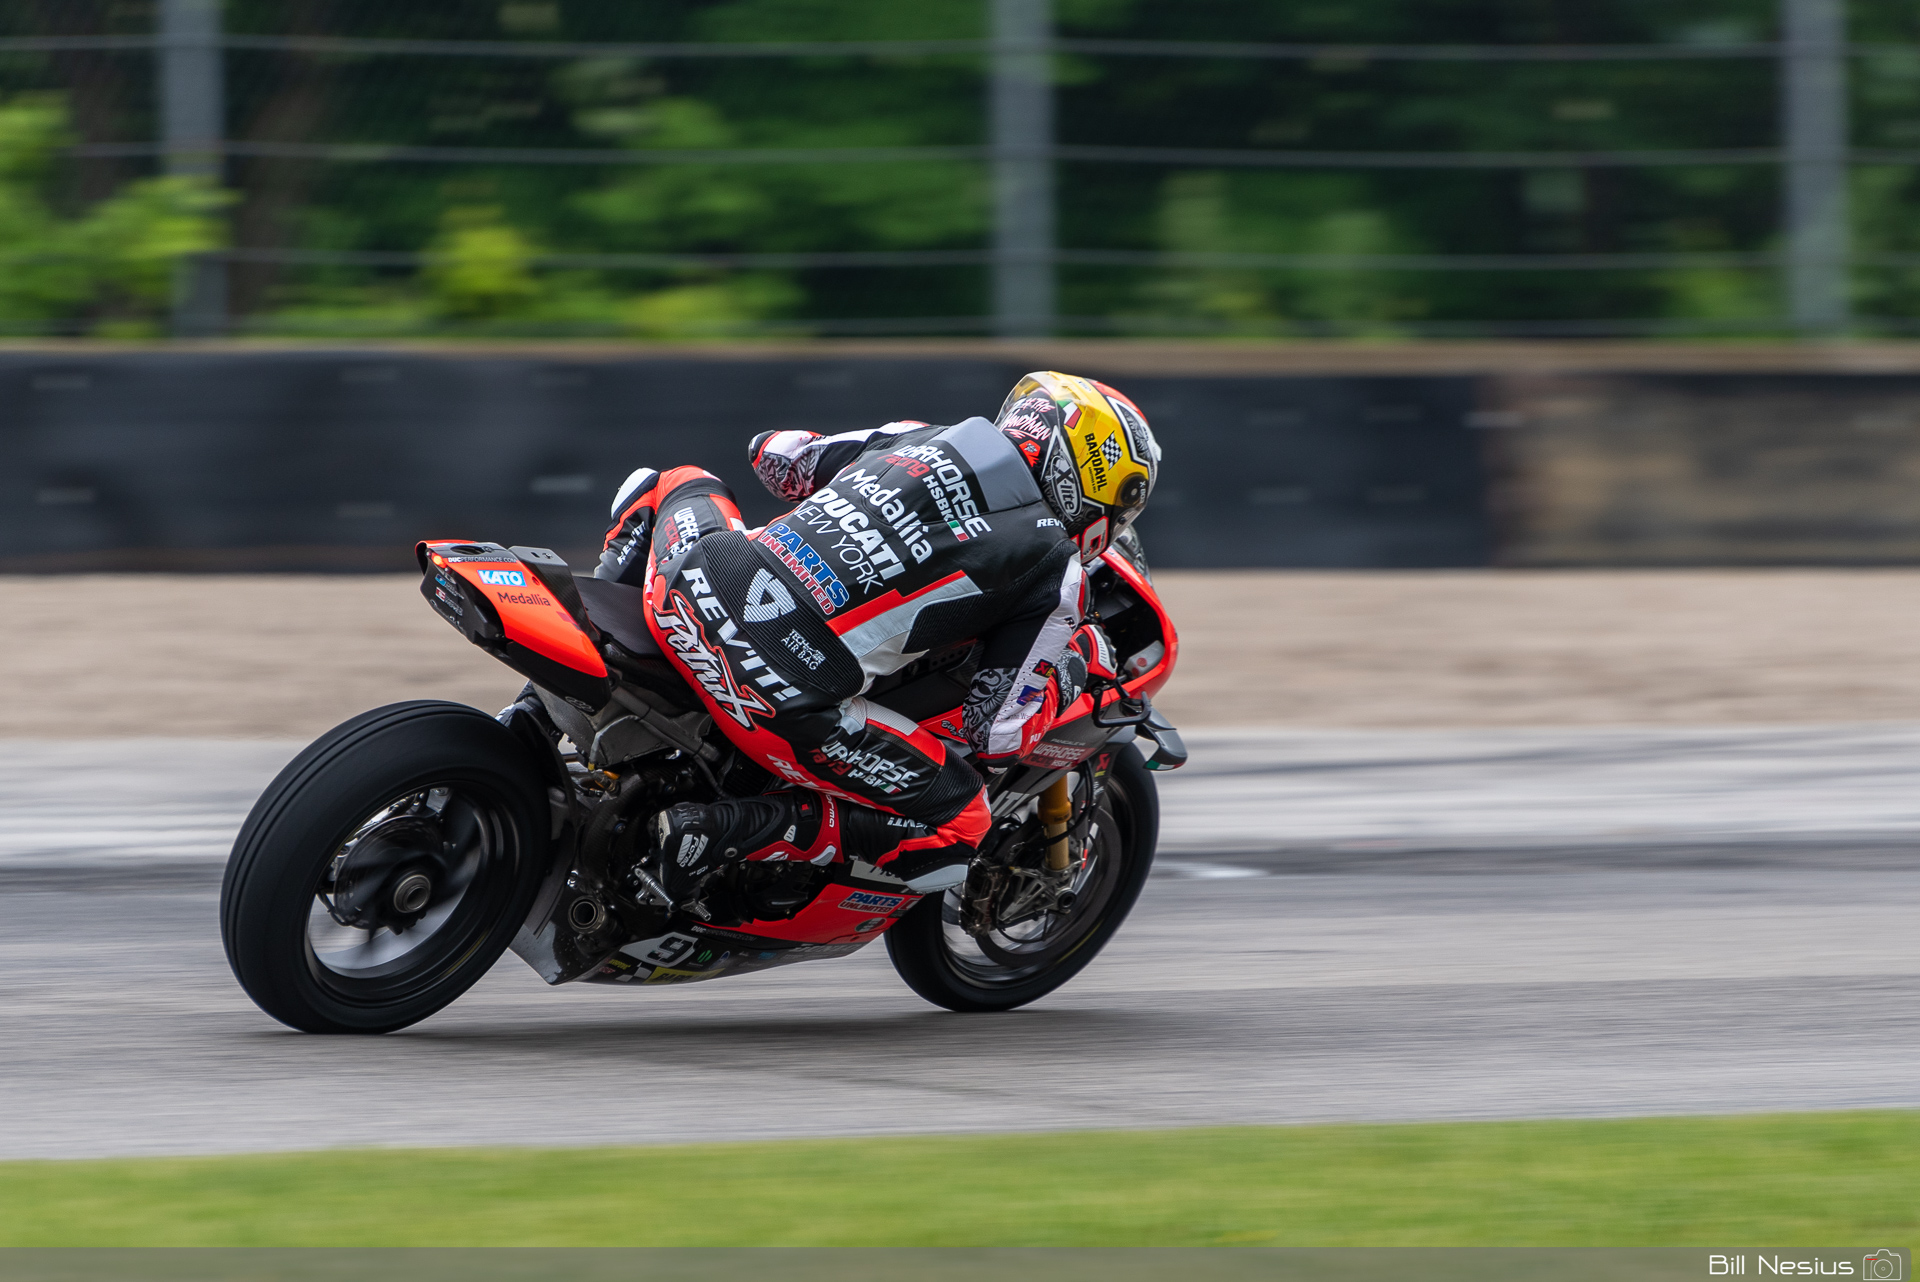 Danilo Petrucci on the Number 9 Warhorse HSBK Racing Ducati Ducati Panigale V4R / DSC_1781 / 4